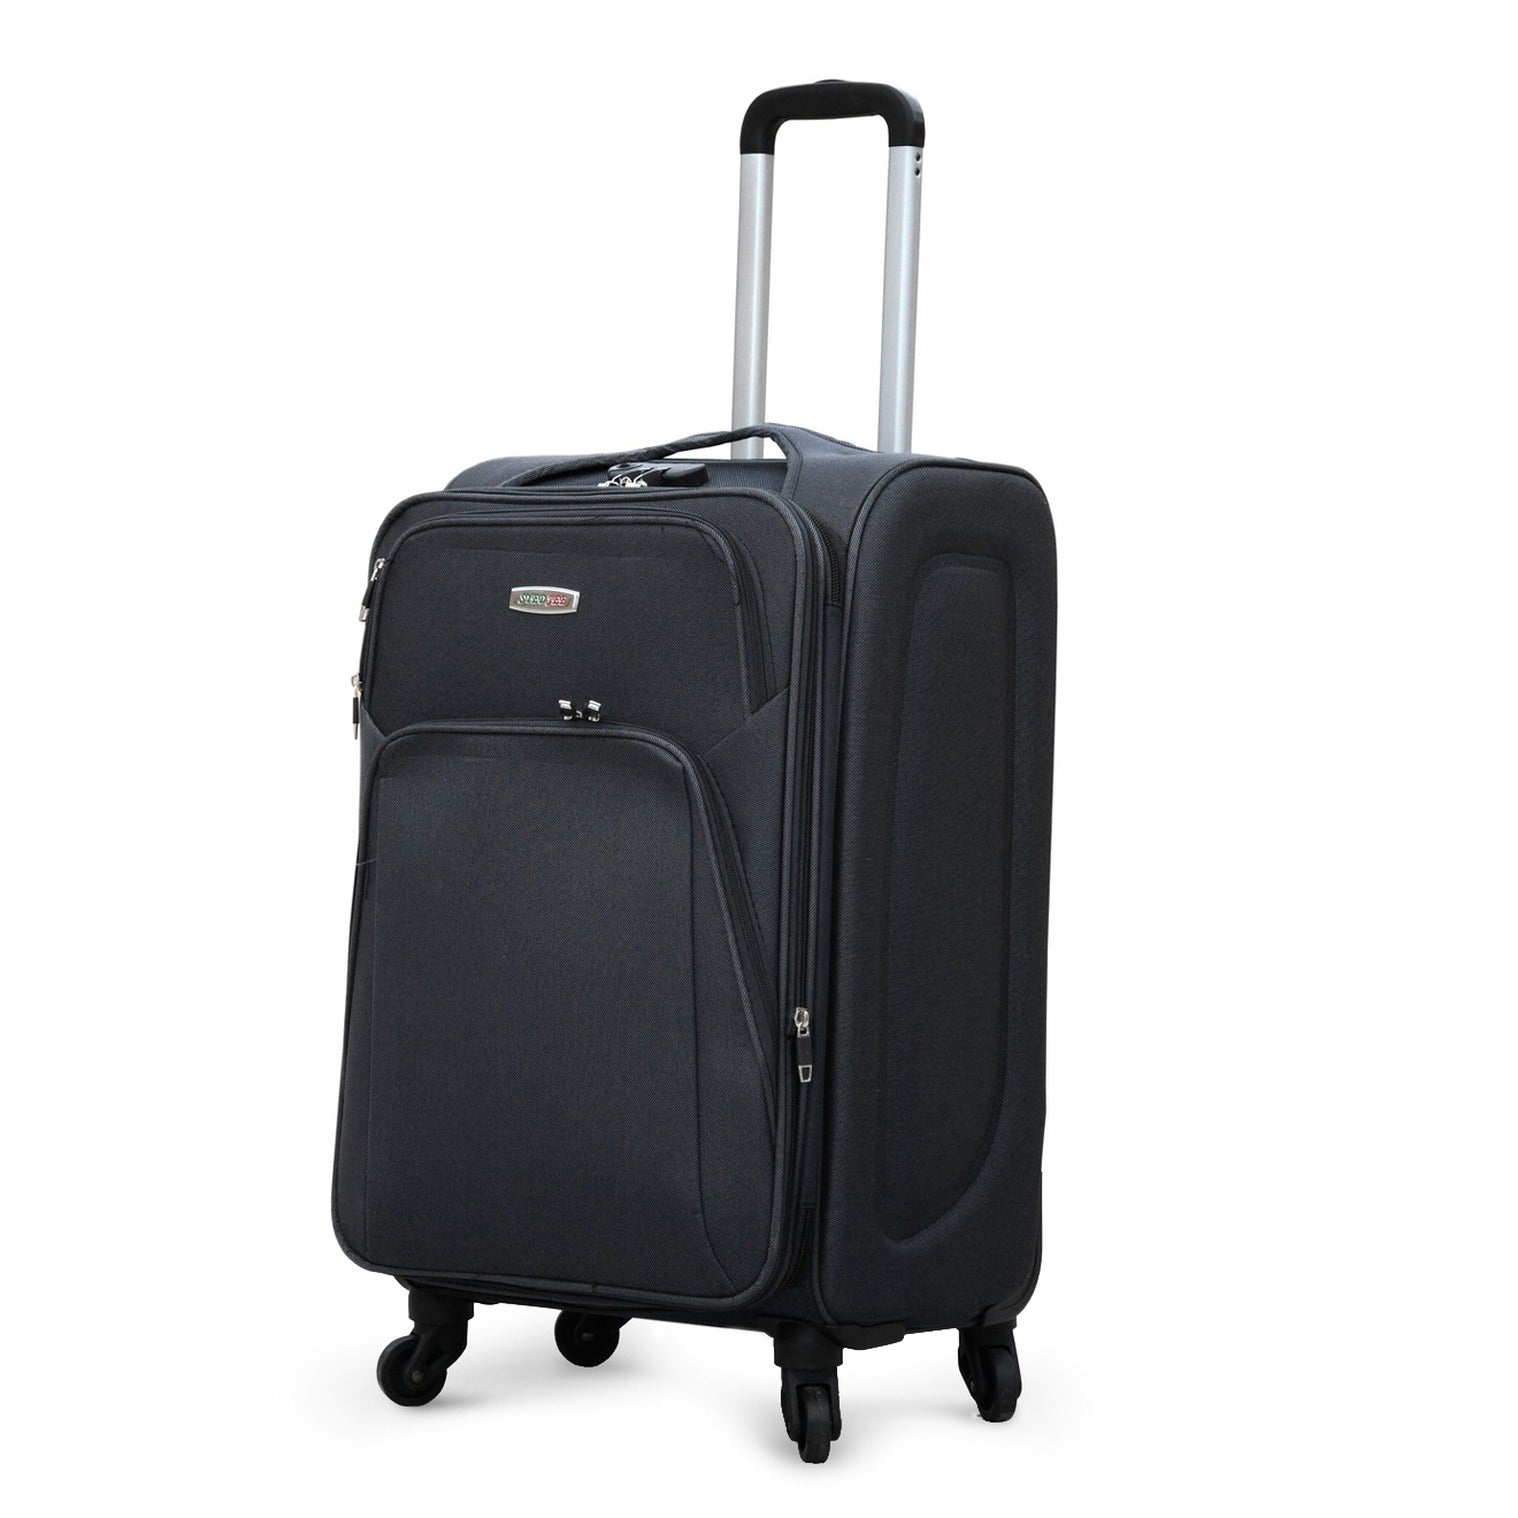 24" SJ JIAN 4 Wheel Lightweight Soft Material Luggage Bag Zaappy